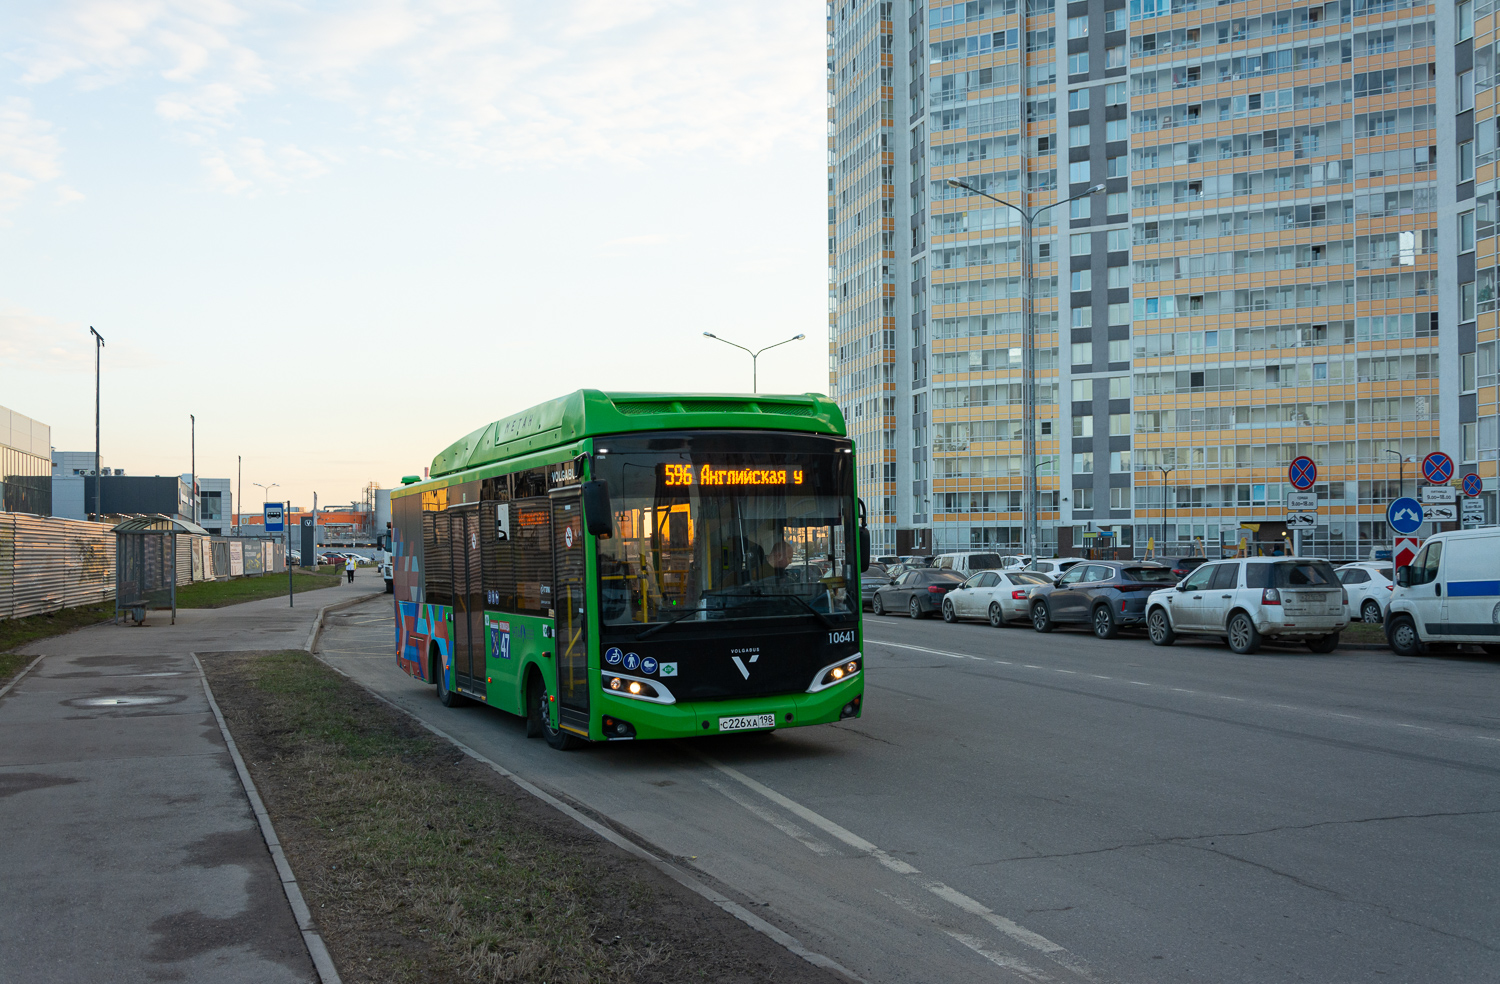 Saint Petersburg, Volgabus-4298.G4 (CNG) # 10641